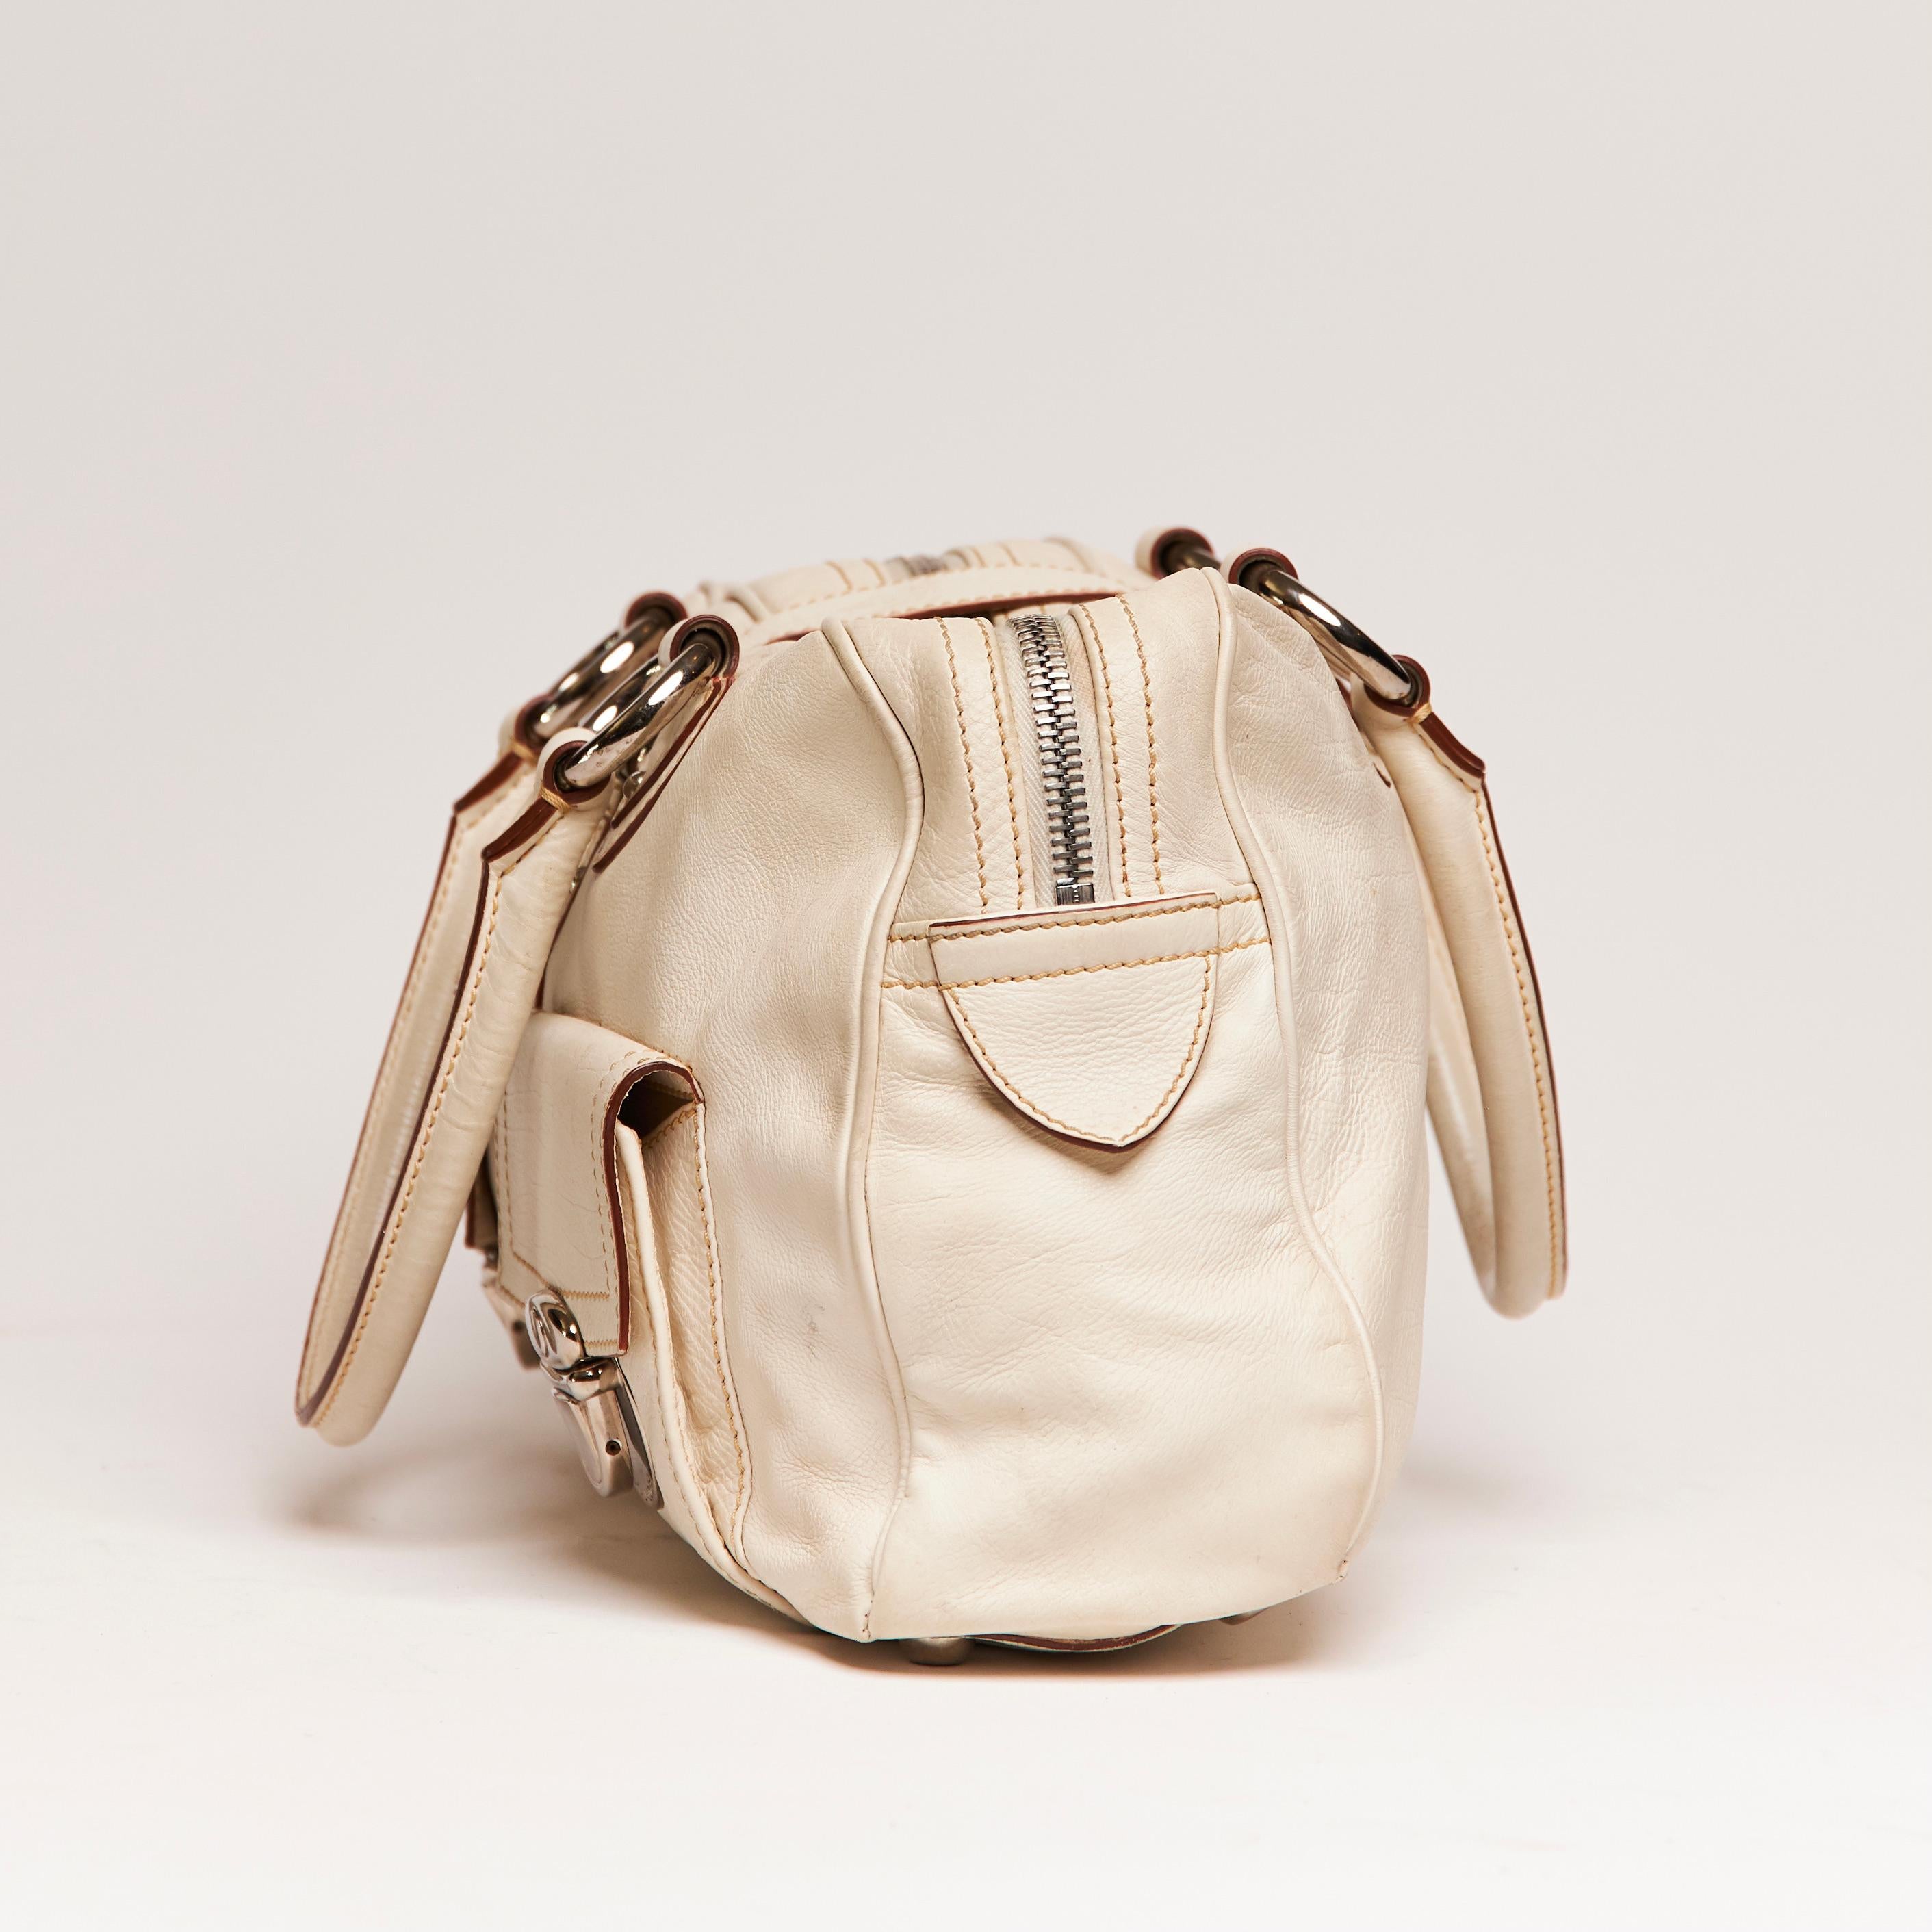 marc jacobs satchel handbags